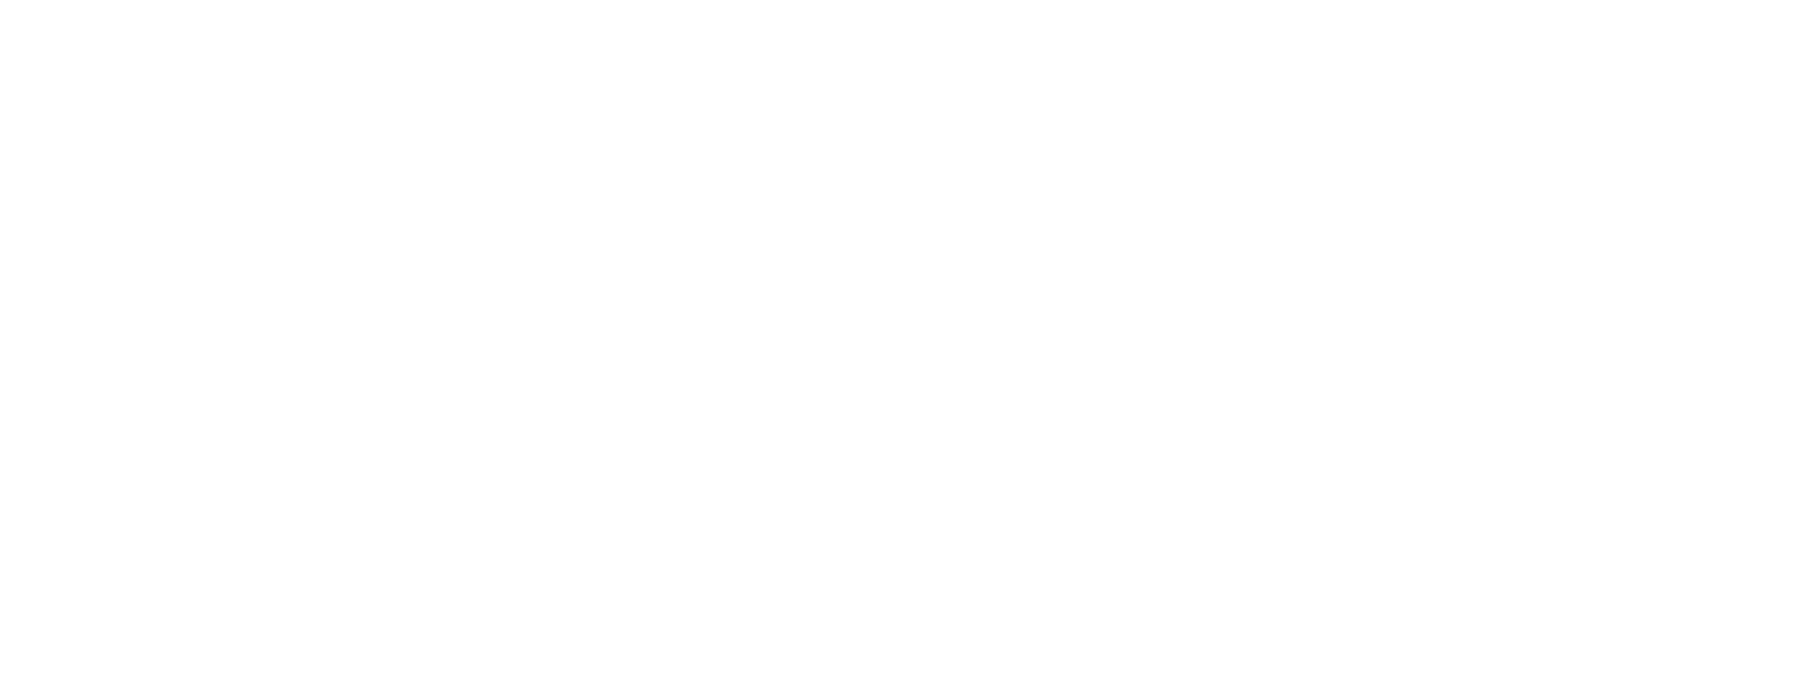 Bandit Productions white horizontal lockup. BP on the left with Bandit Productions on the right.